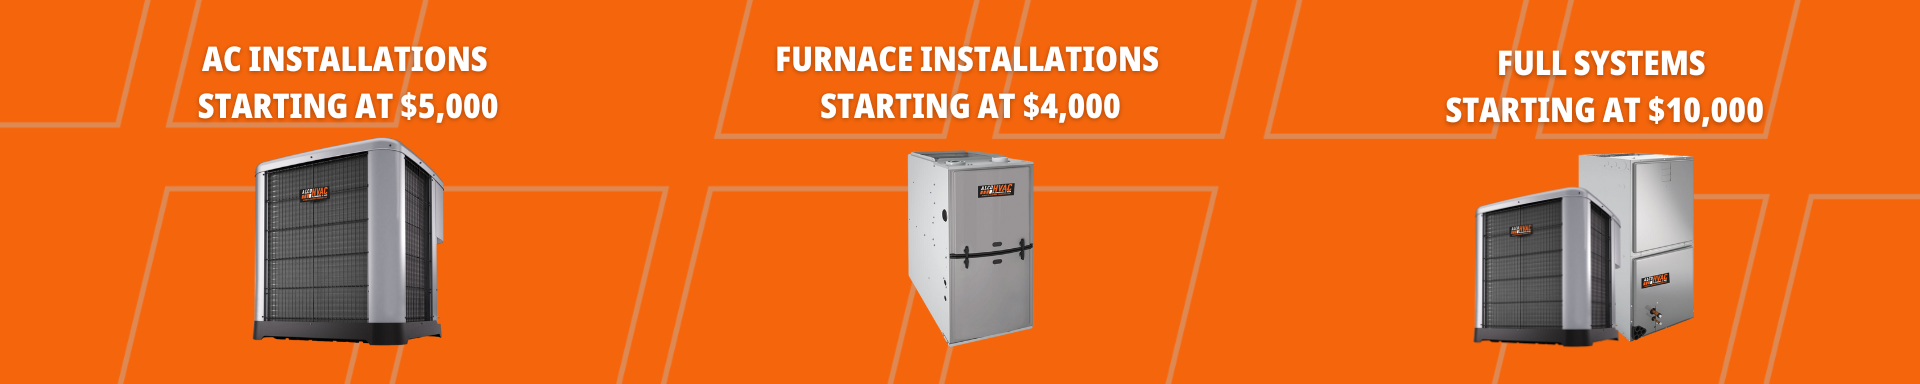 Furnace installation starting at $4,000